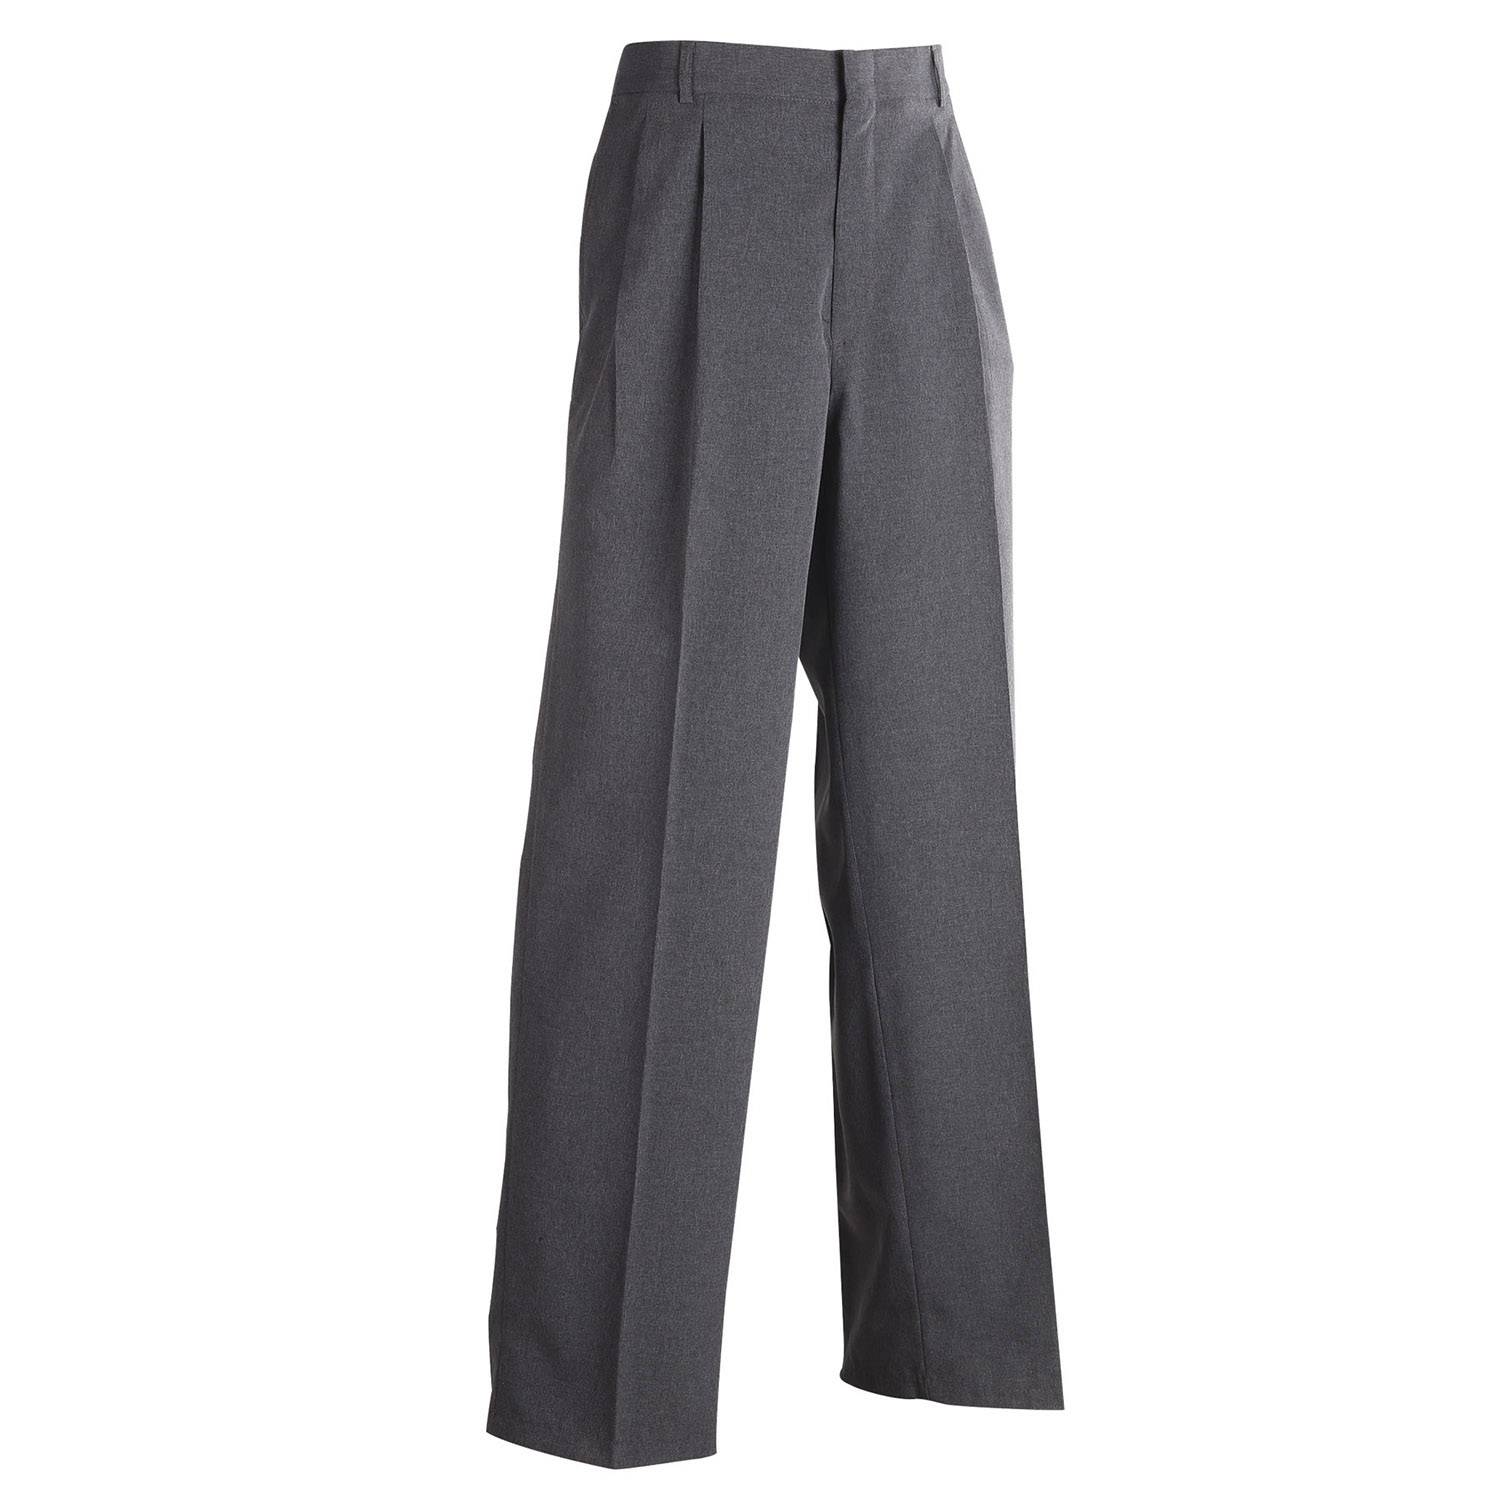 Mens Postal Uniform Pants for Window Clerks - Gray (PX750)